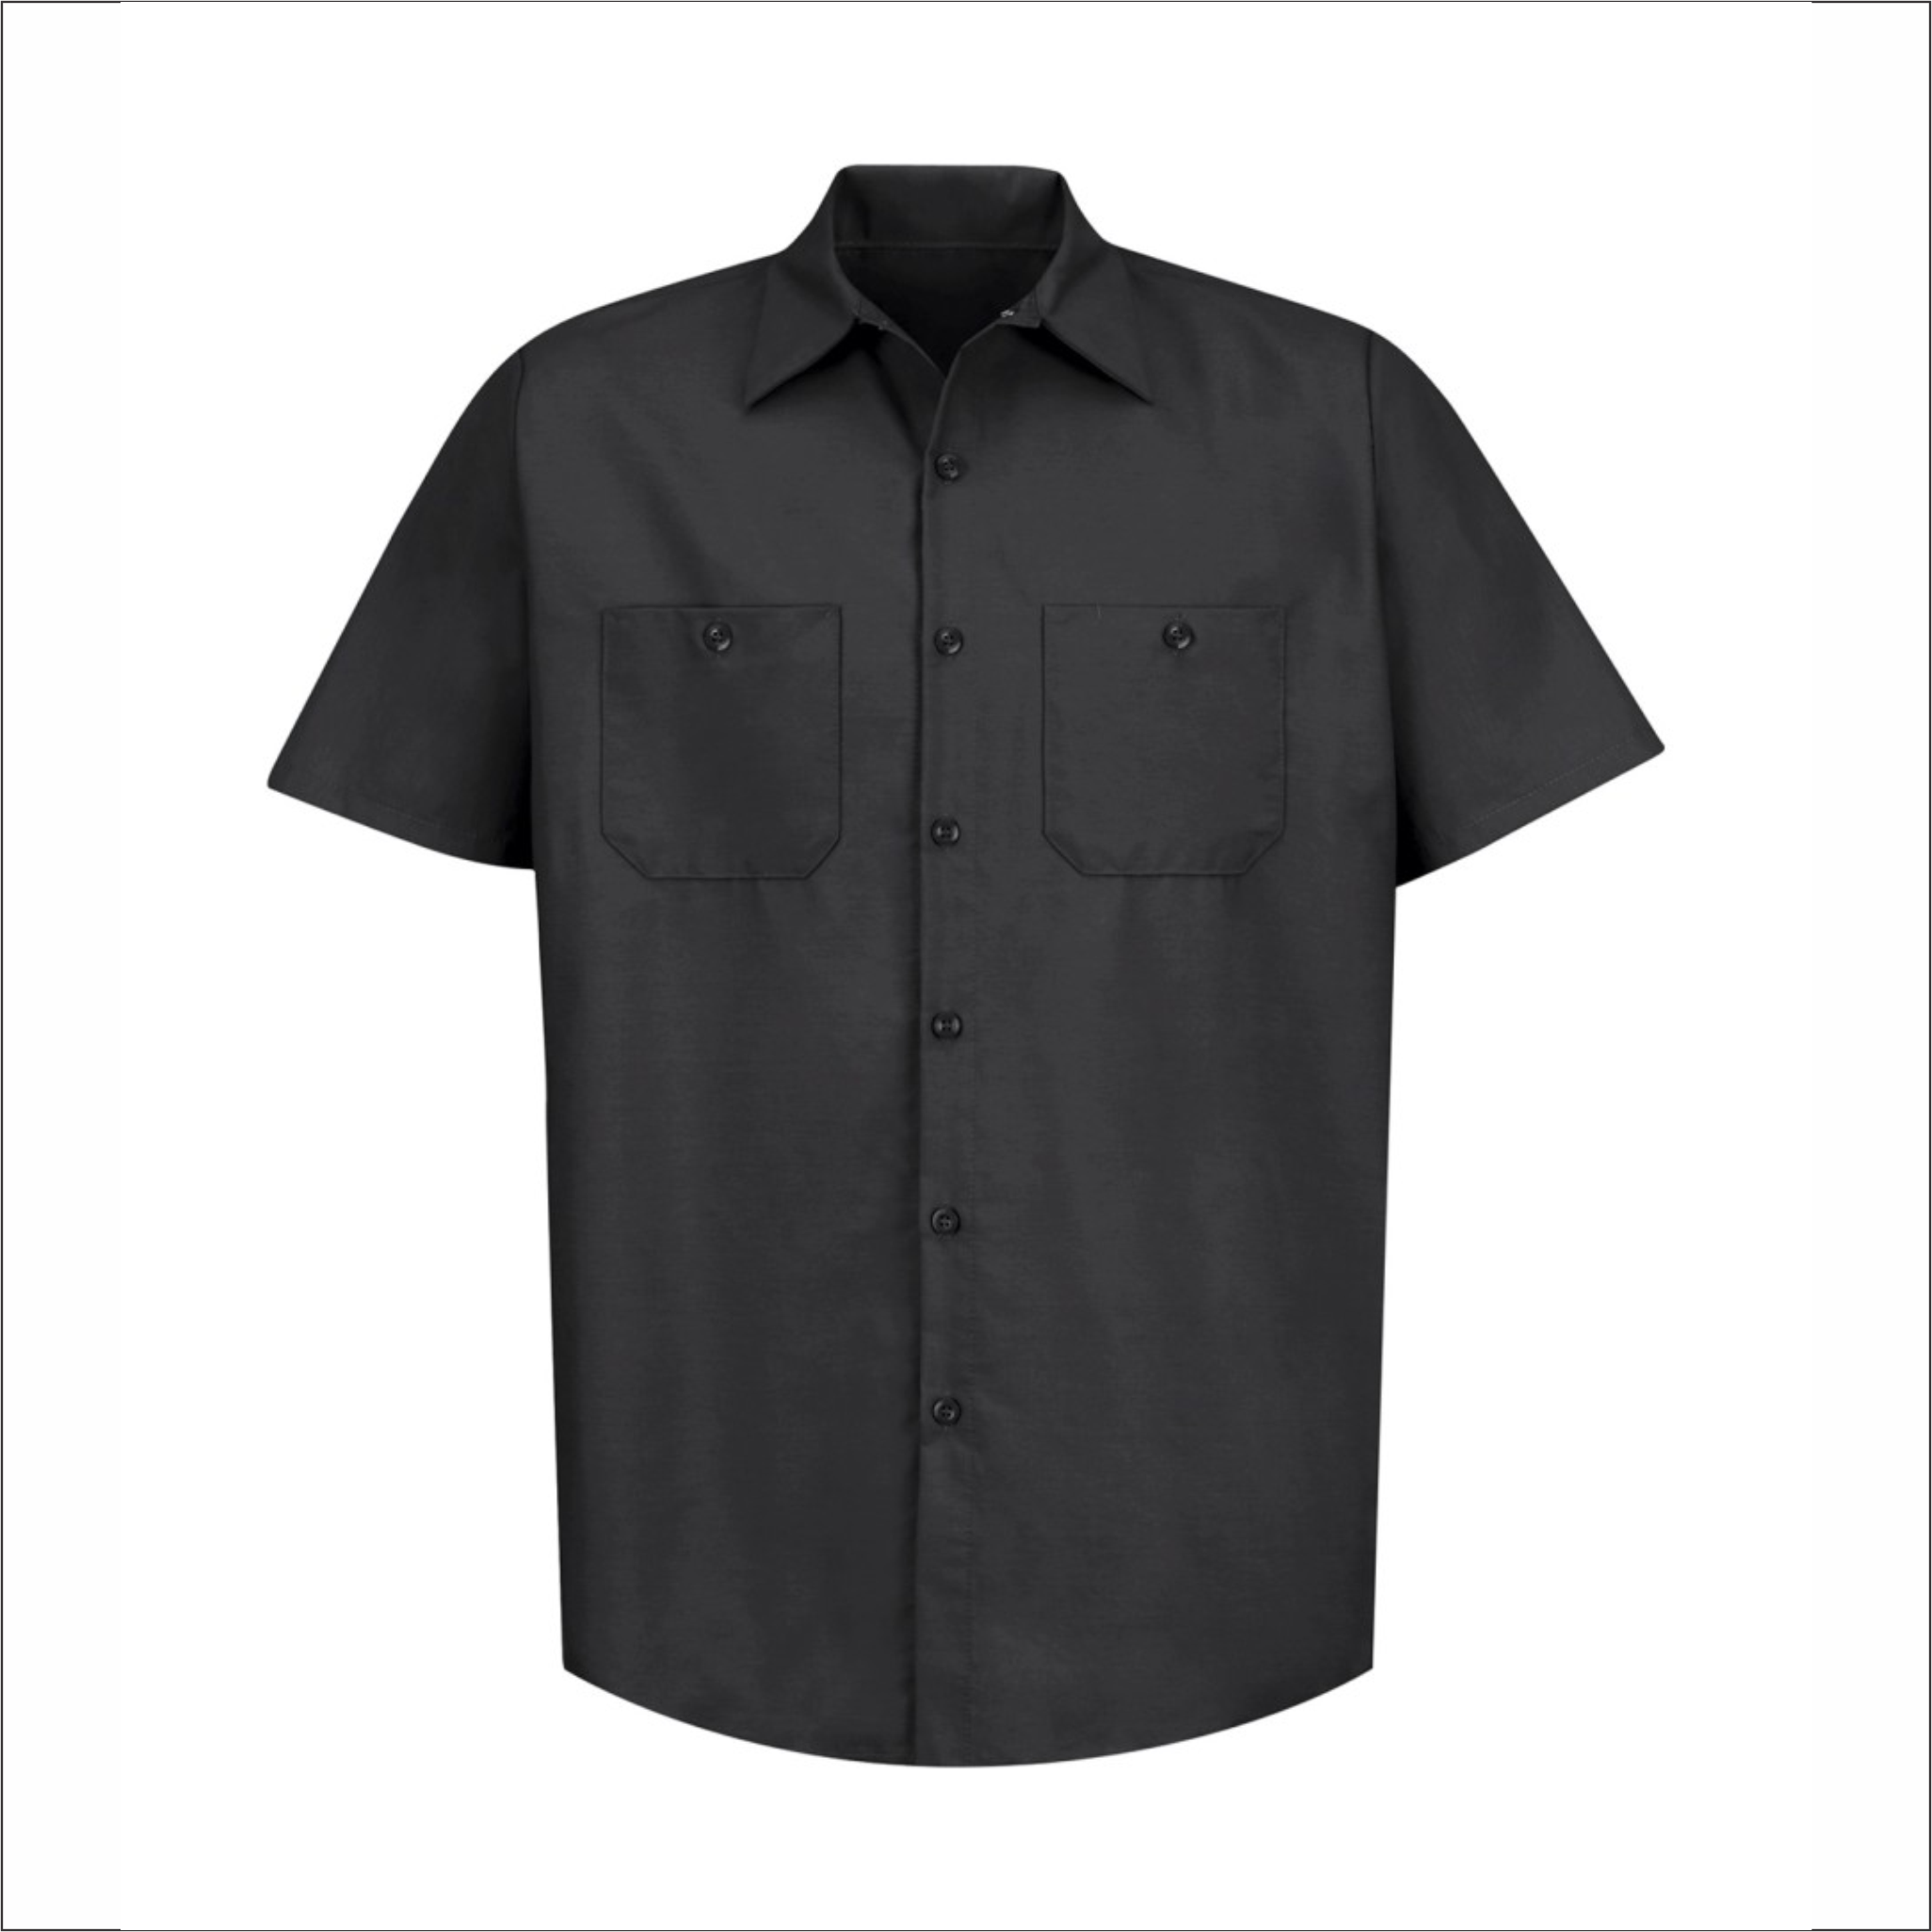 Adult Dress Black Shirt - Short Sleeve - SP24